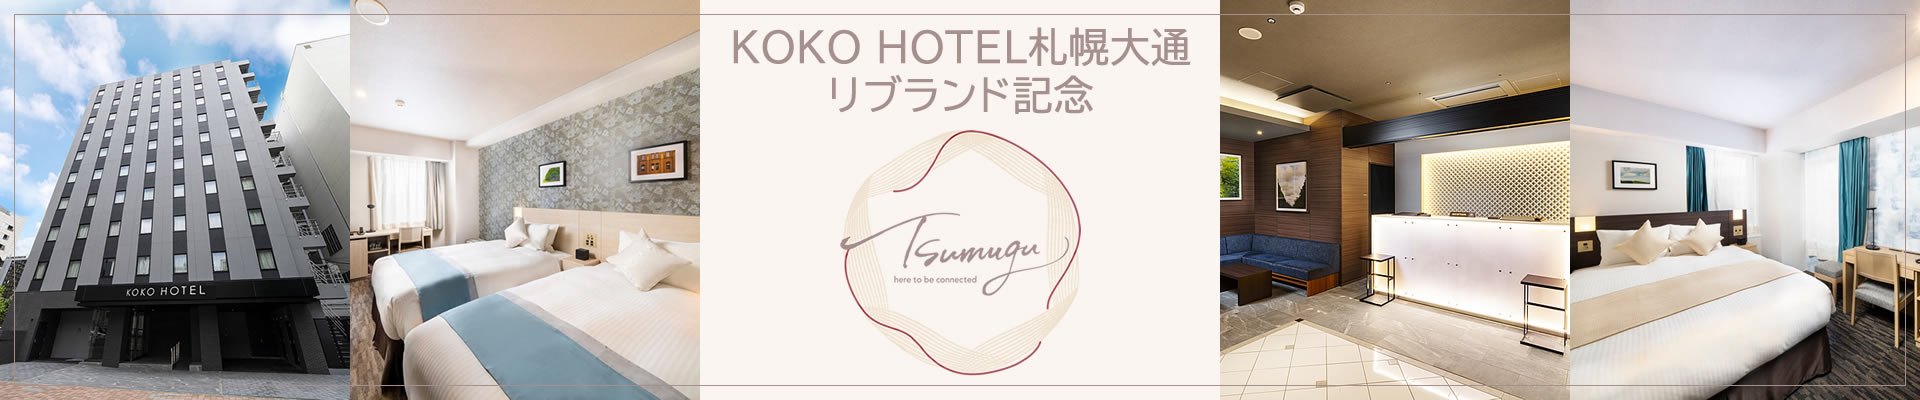 KOKO HOTEL 札幌大通リブランド記念プラン